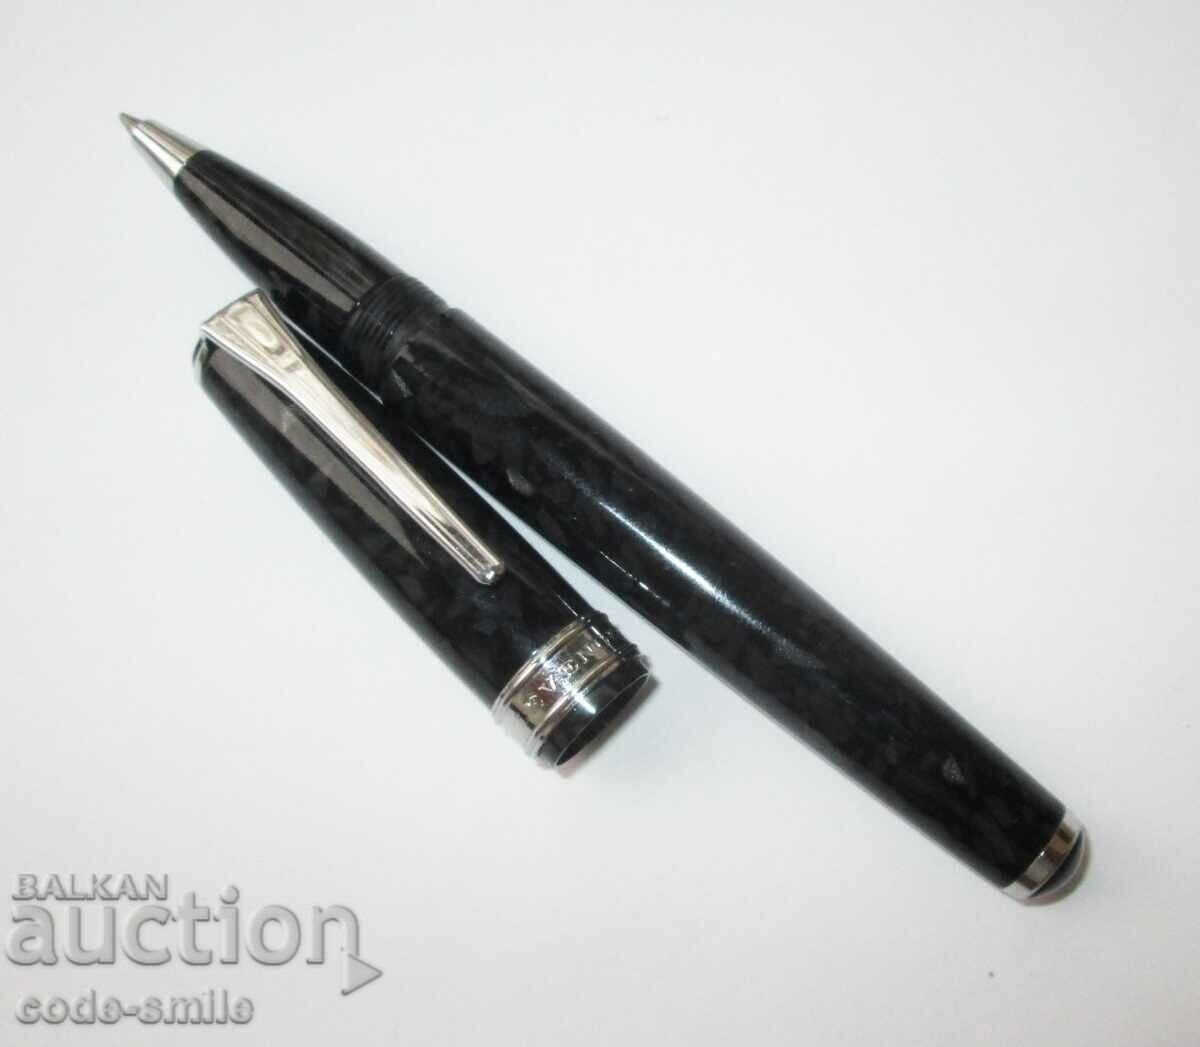 German LEVENGER luxury pearl ballpoint pen